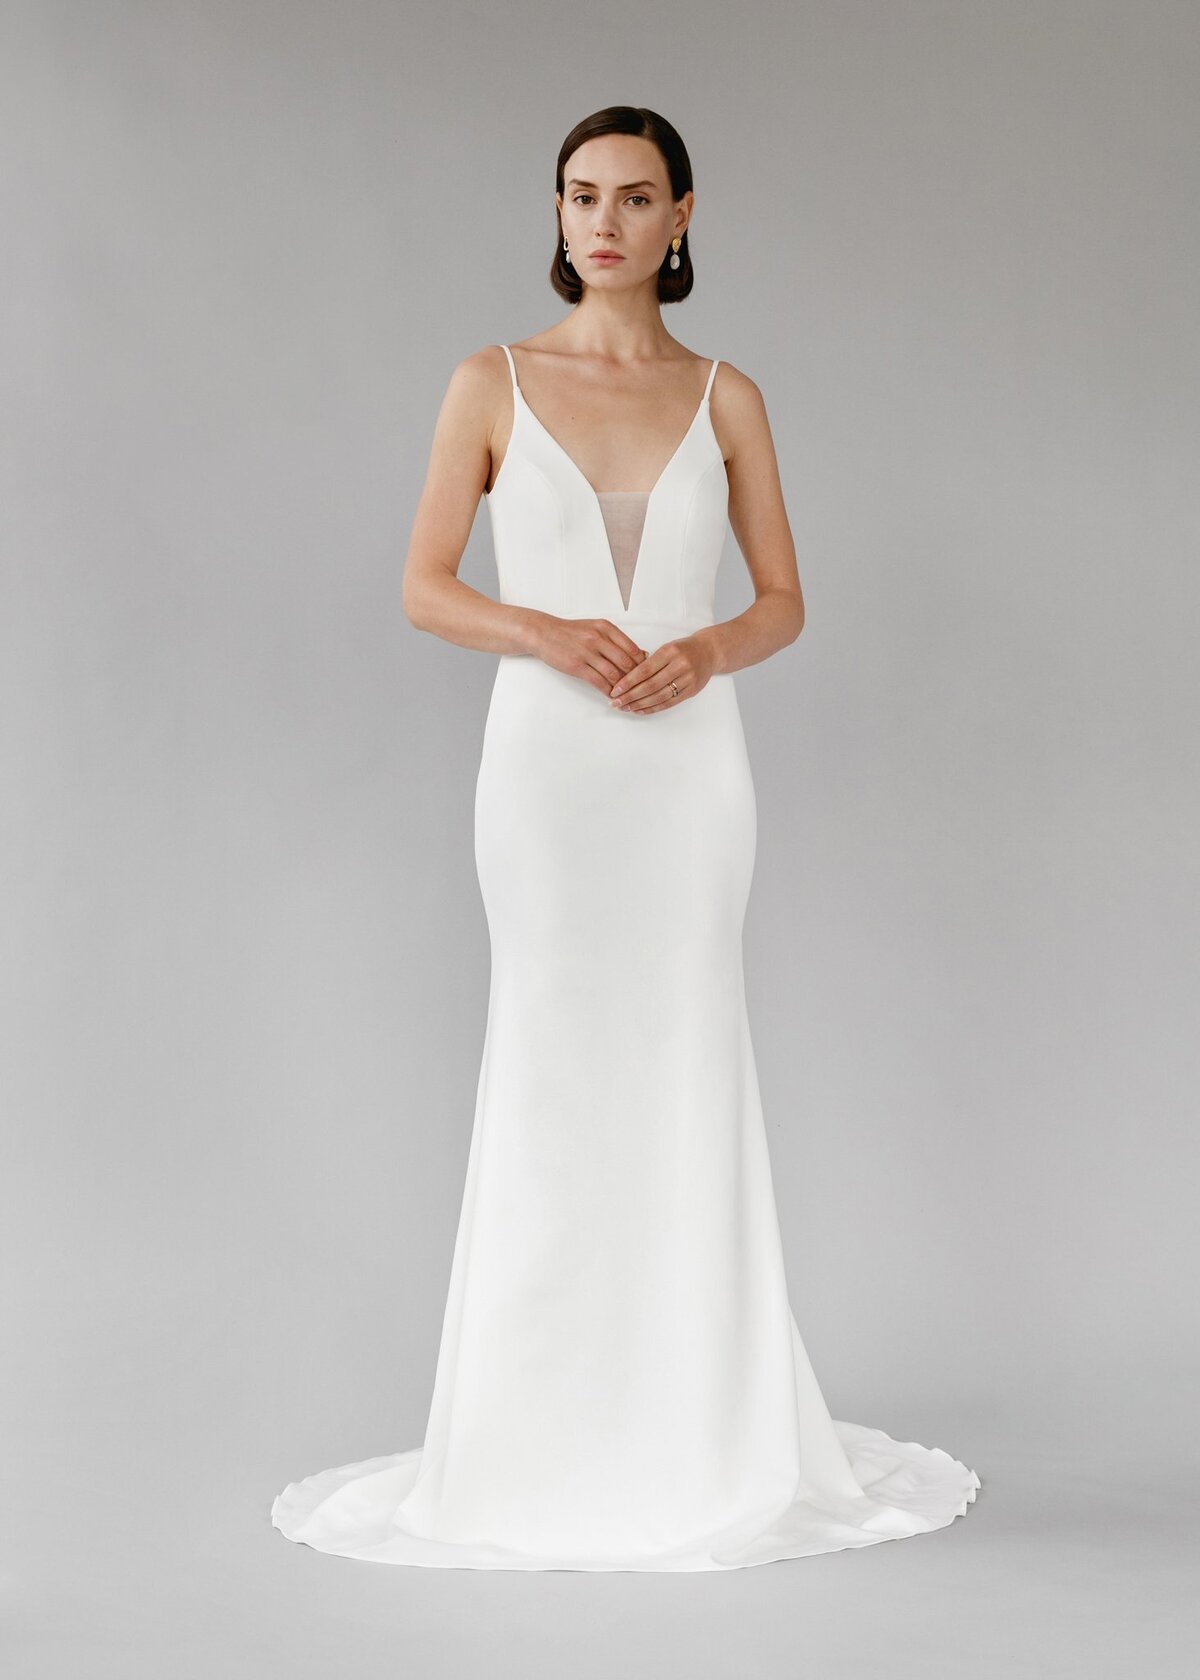 Sash + Bustle | Bridal Collection | Wedding Gowns | Toronto